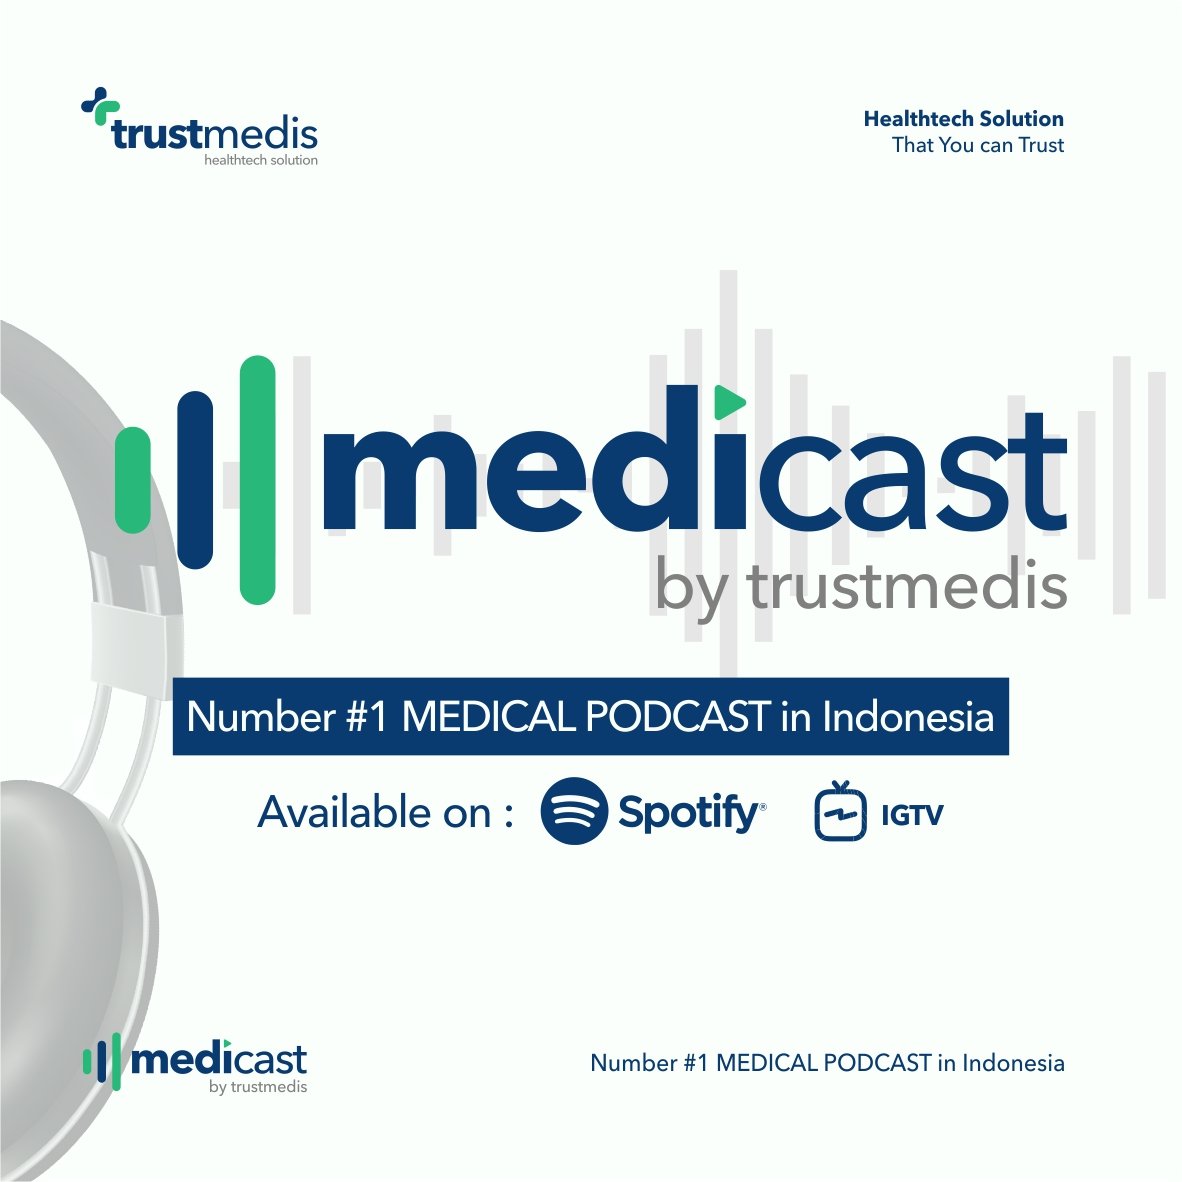 Medicast by trustmedis